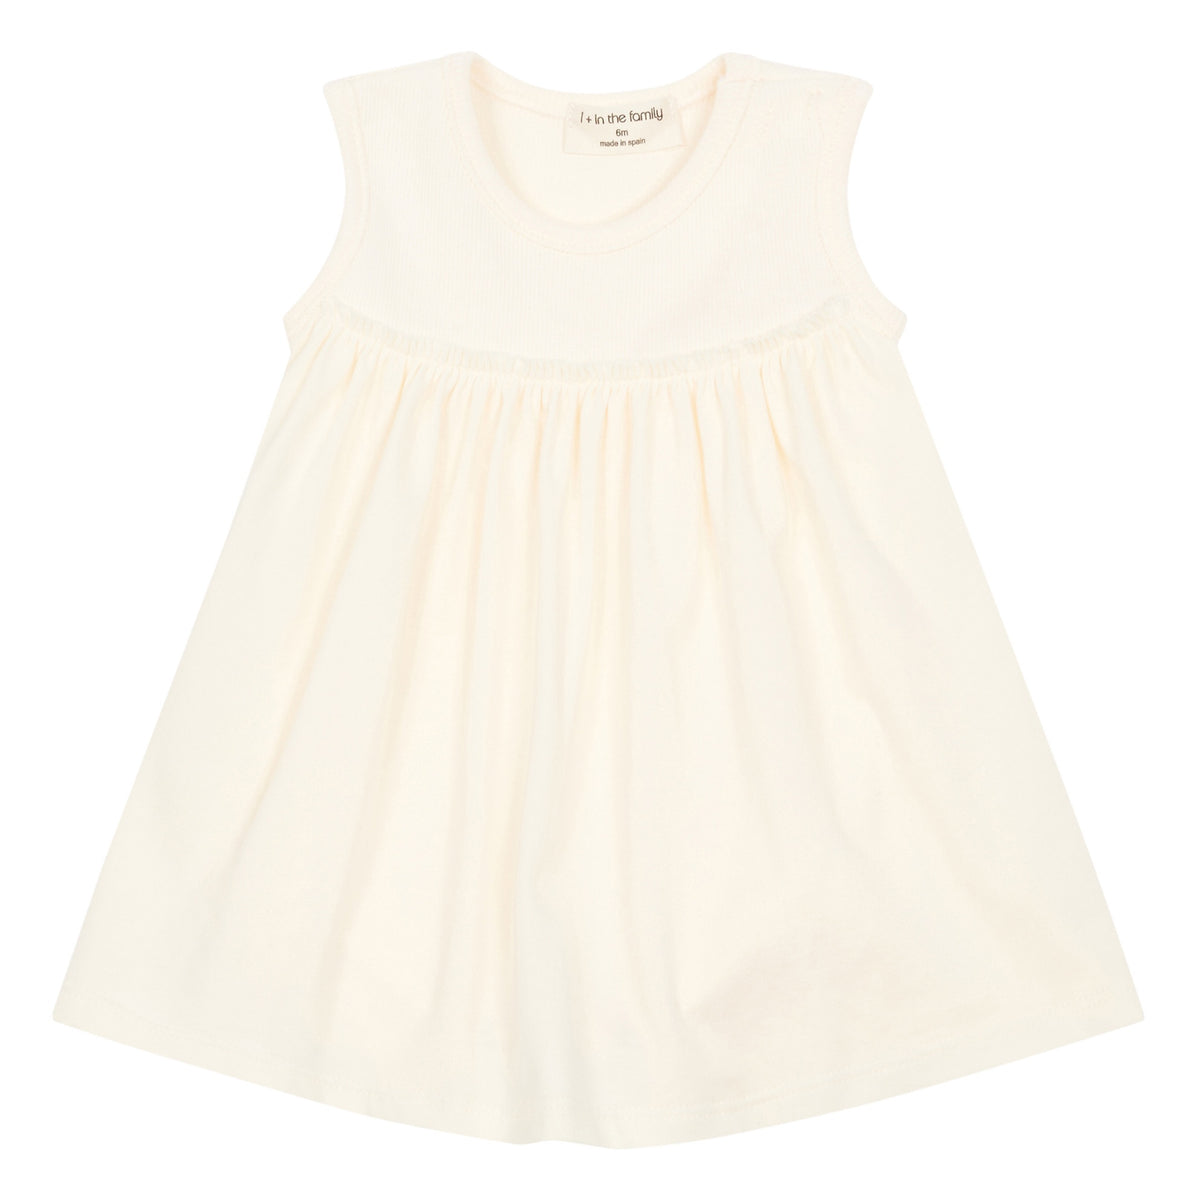 White long organic cotton baby dress